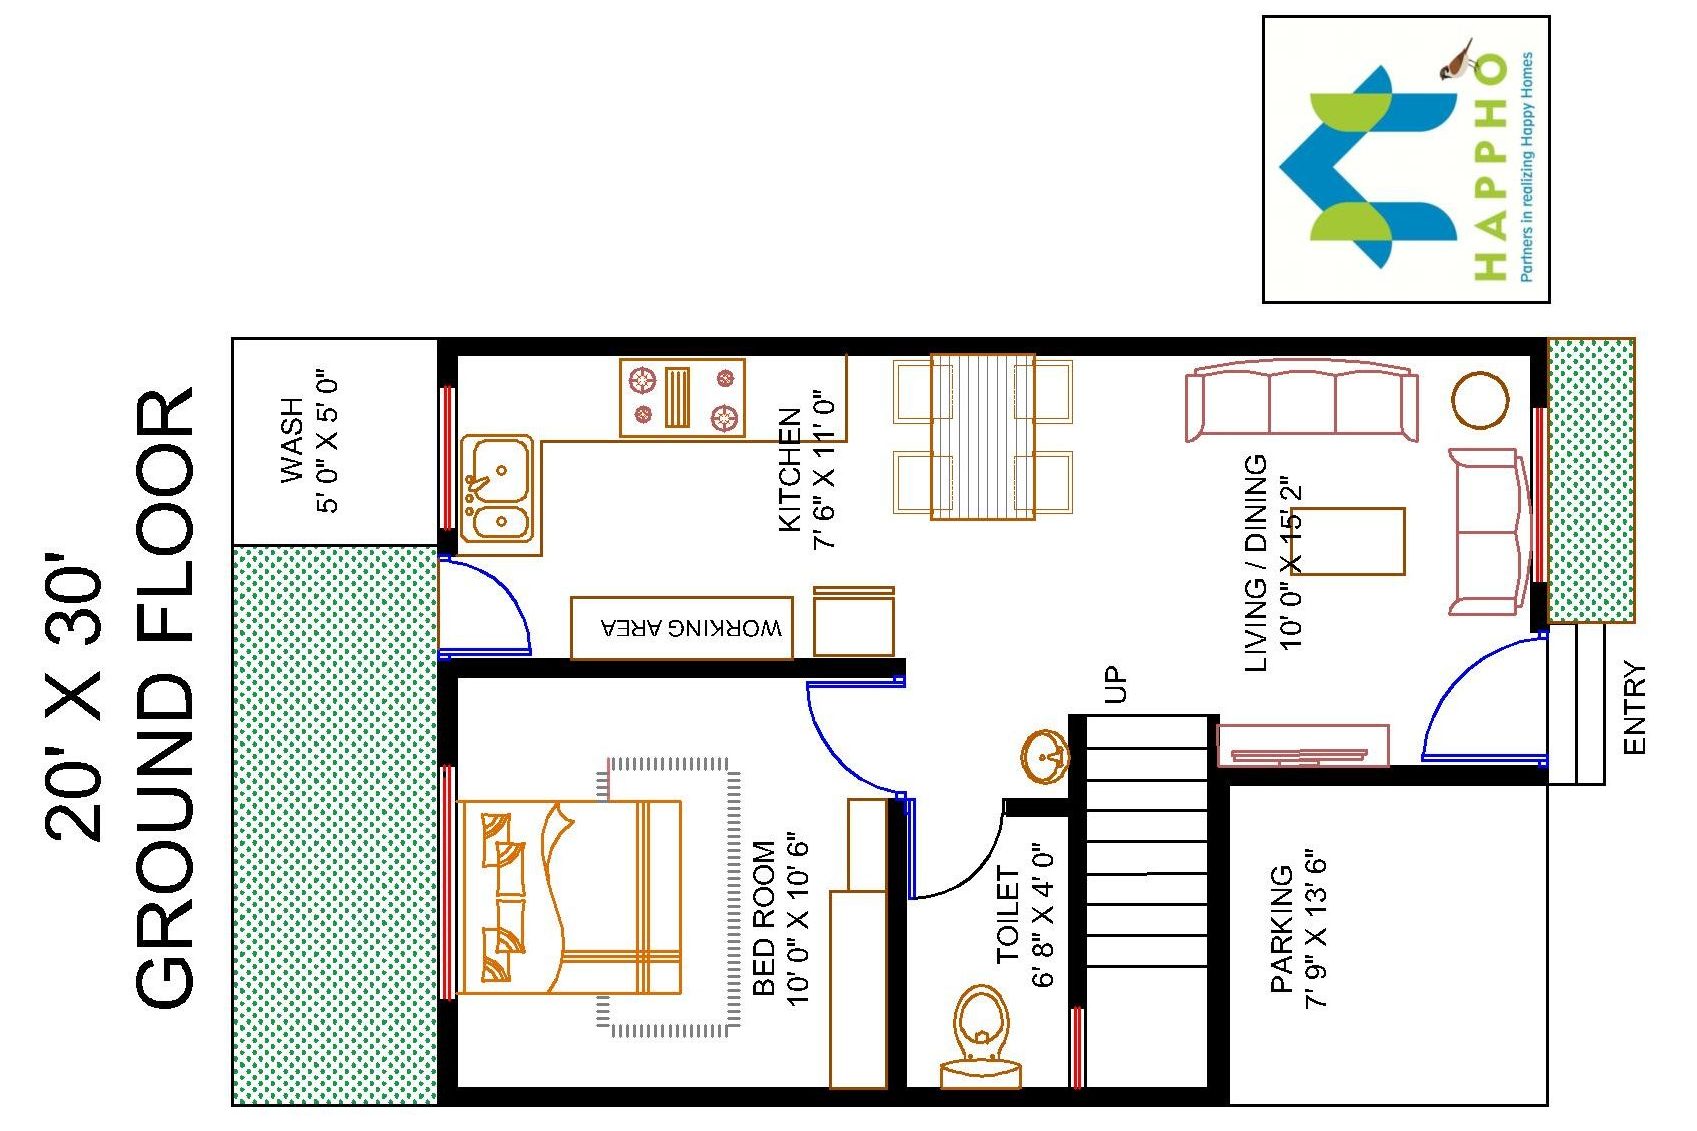 Floor Plan for 20 X 30 Plot | 1-BHK (600 Square Feet/67 SquareYards ...